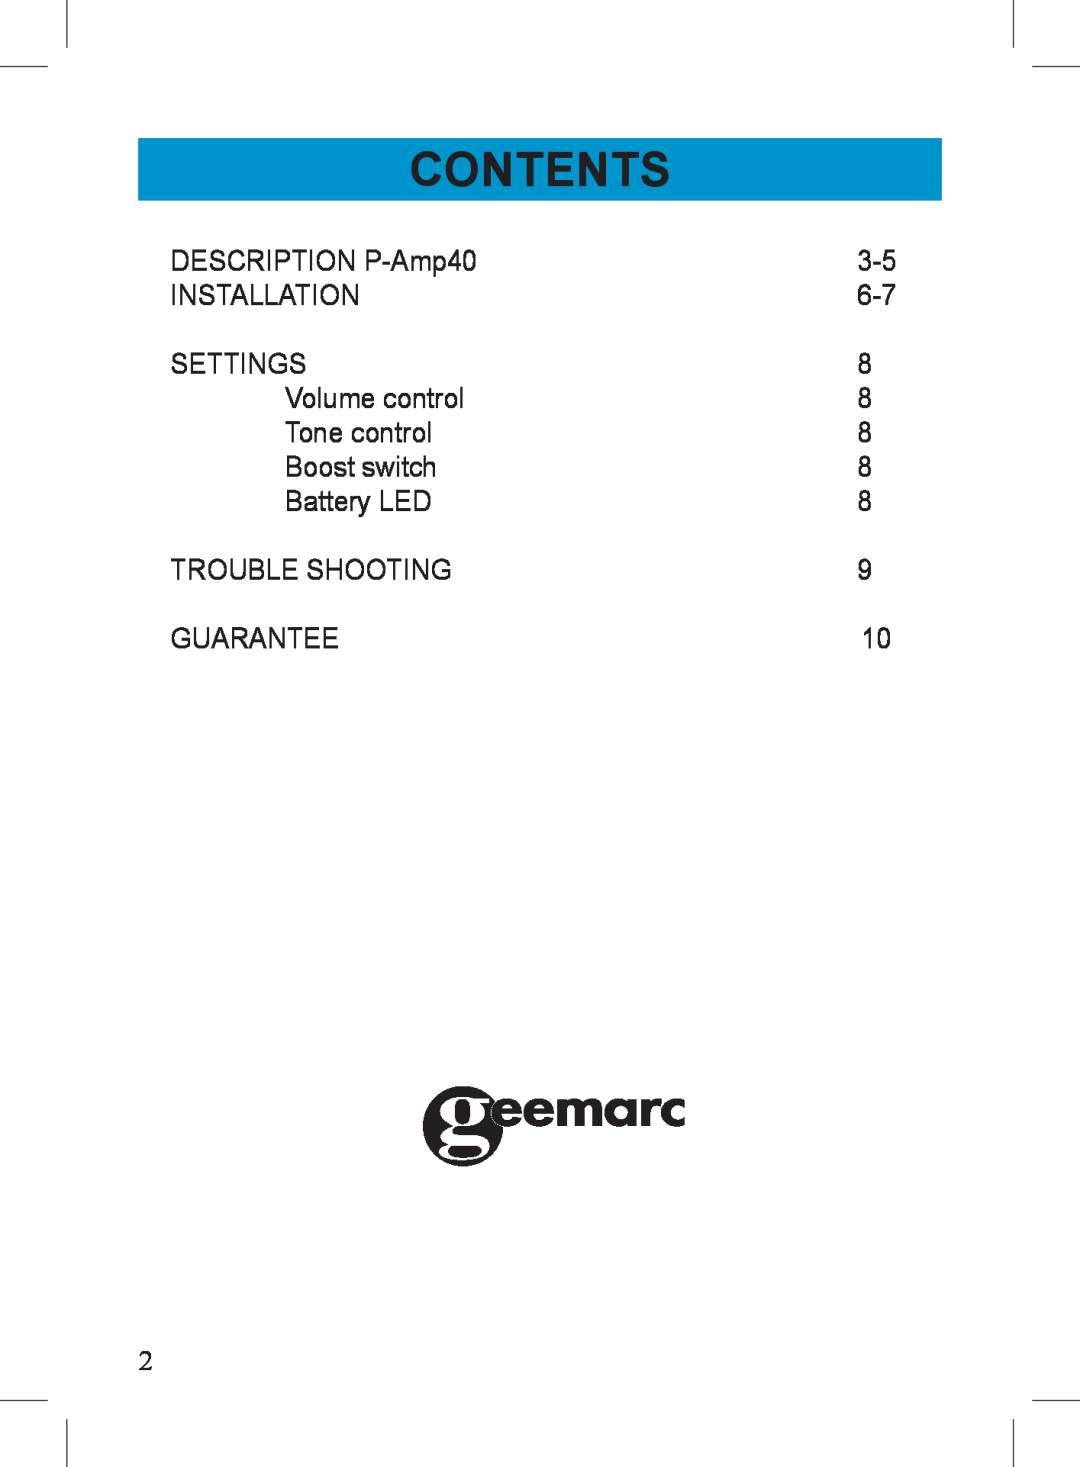 Geemarc P-AMP40 manual Contents 